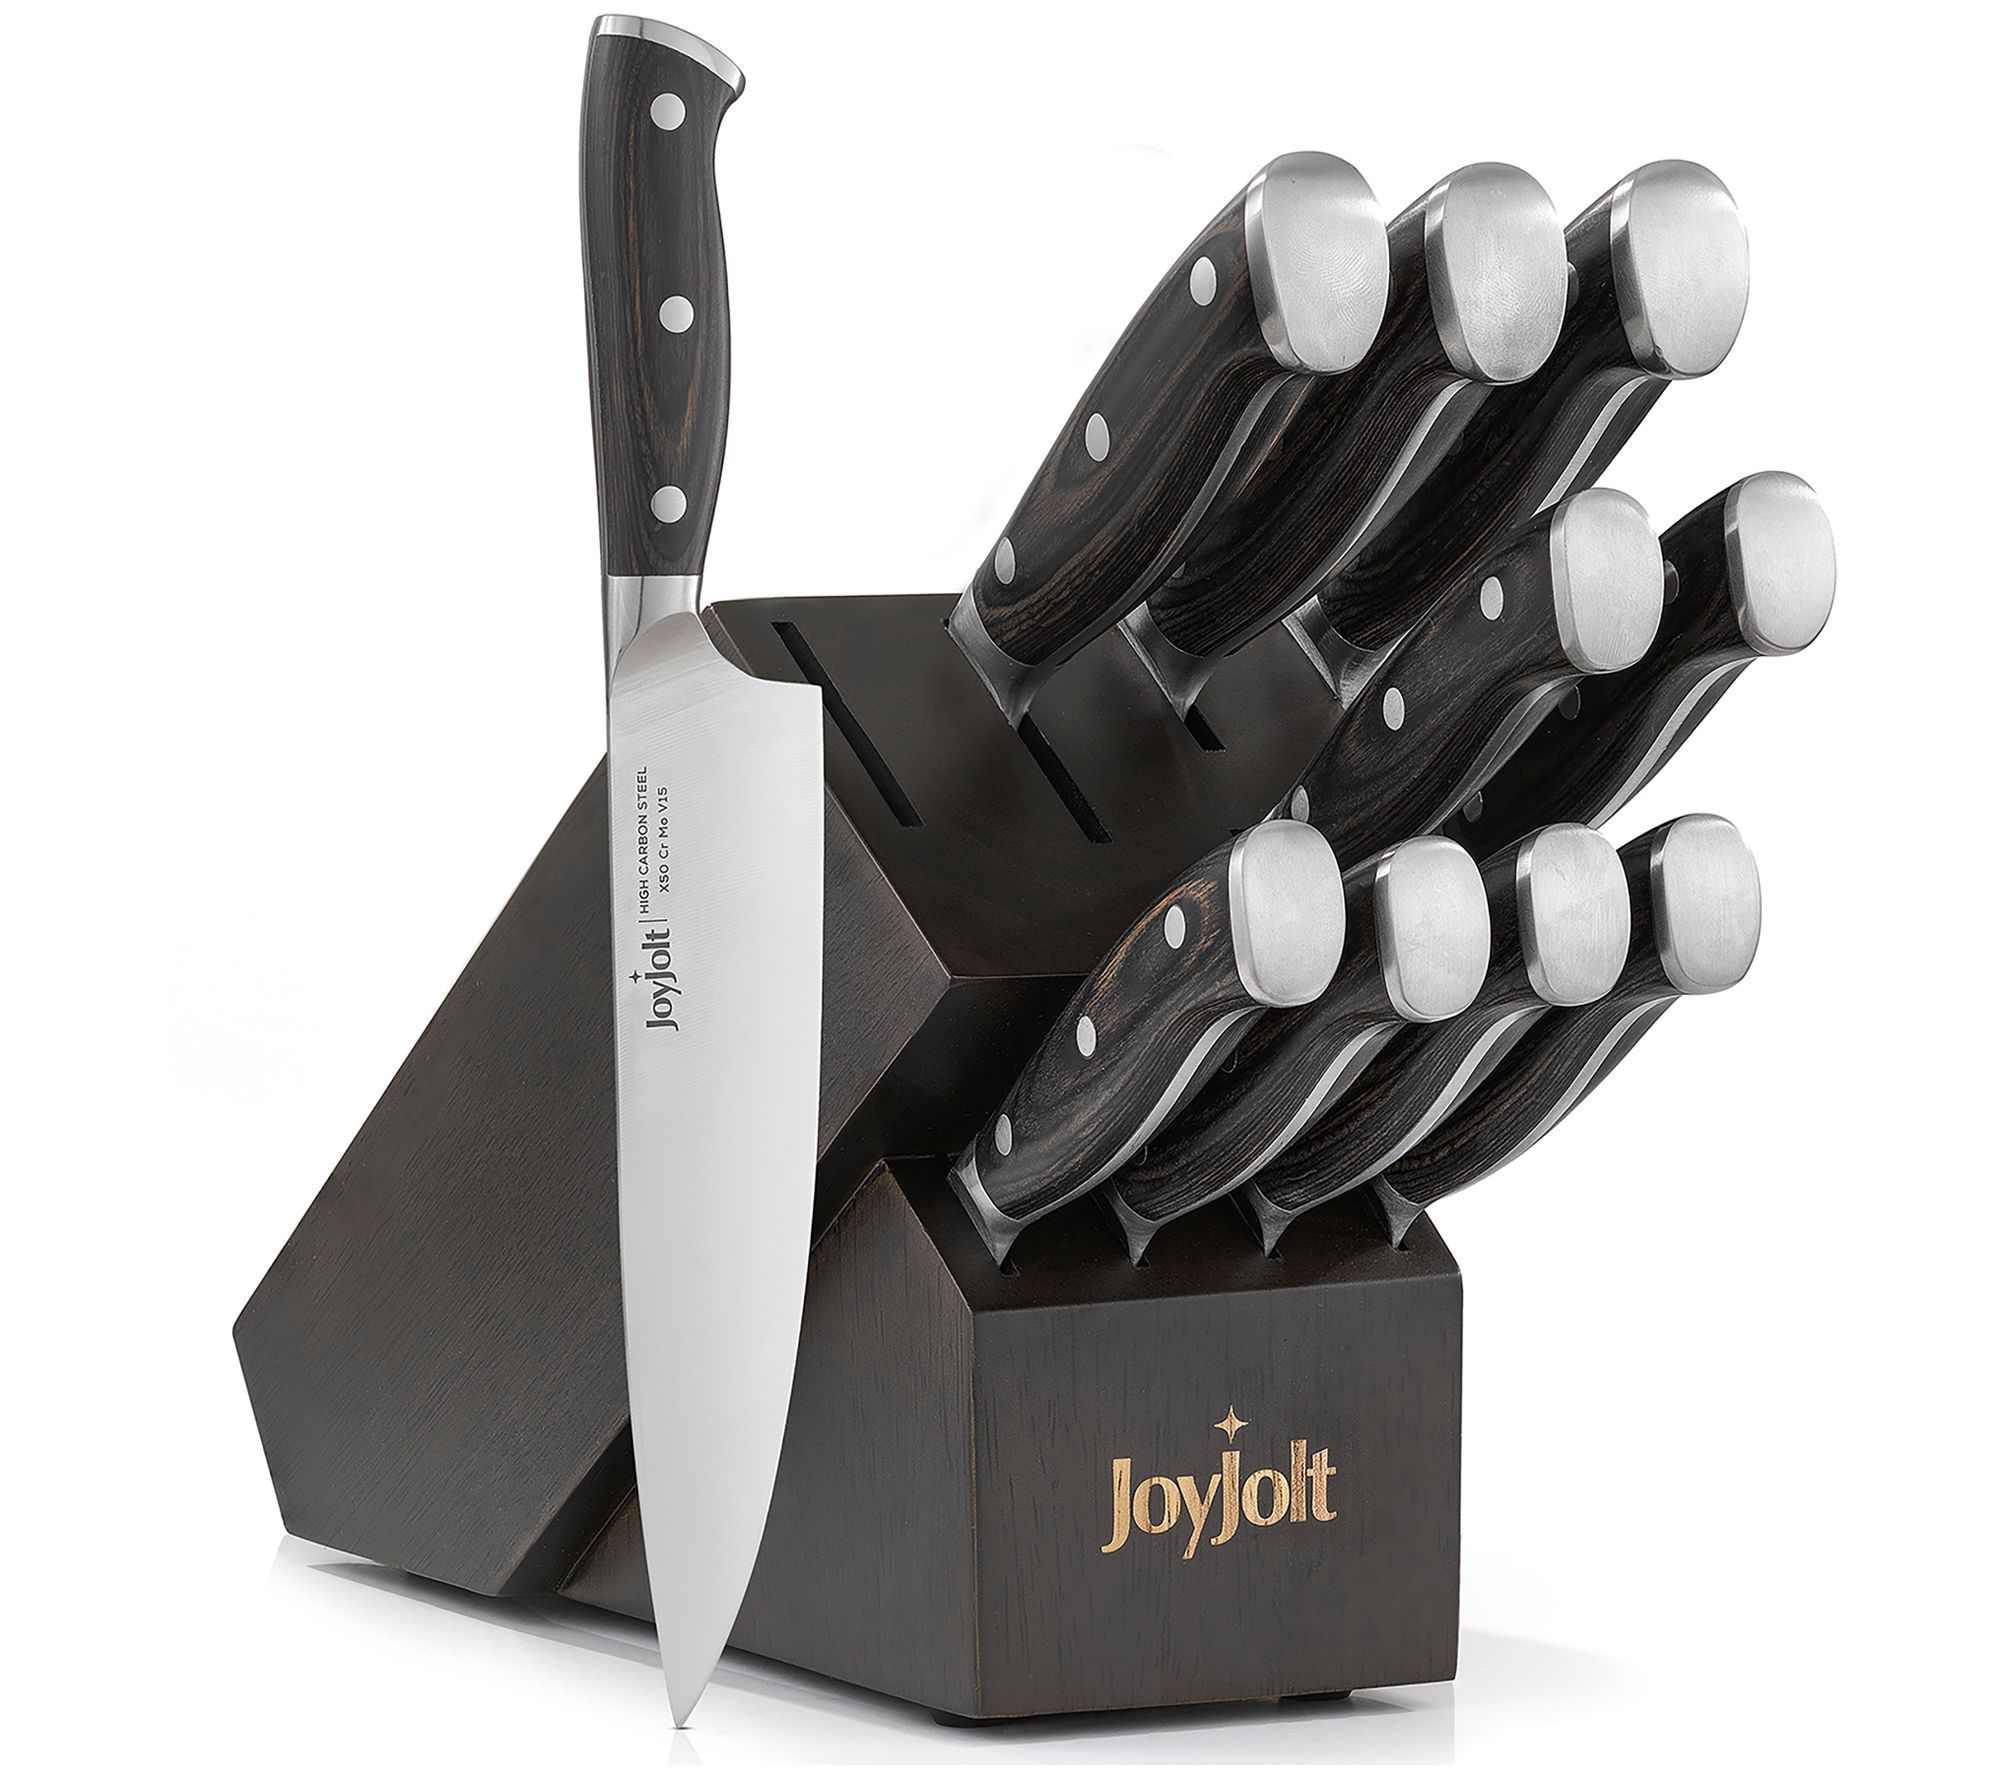 KitchenAid Stainless Steel 14-Pc. Knife Block Set | Brown | One Size | Cutlery Knife Block Sets | Dishwasher Safe